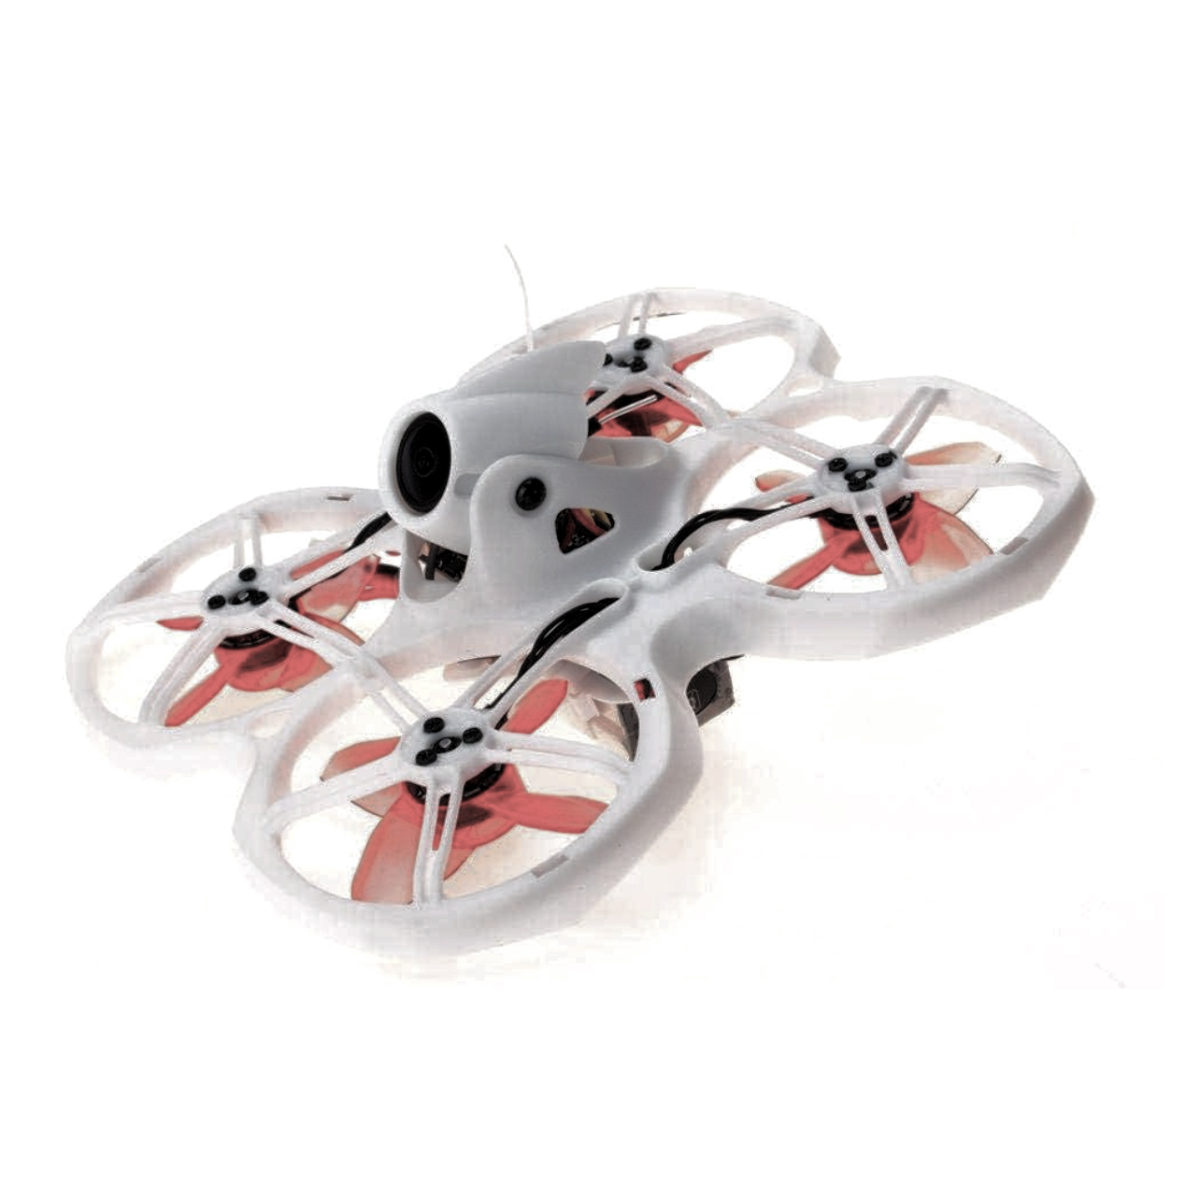 An EMAX Tinyhawk 2 racing drone